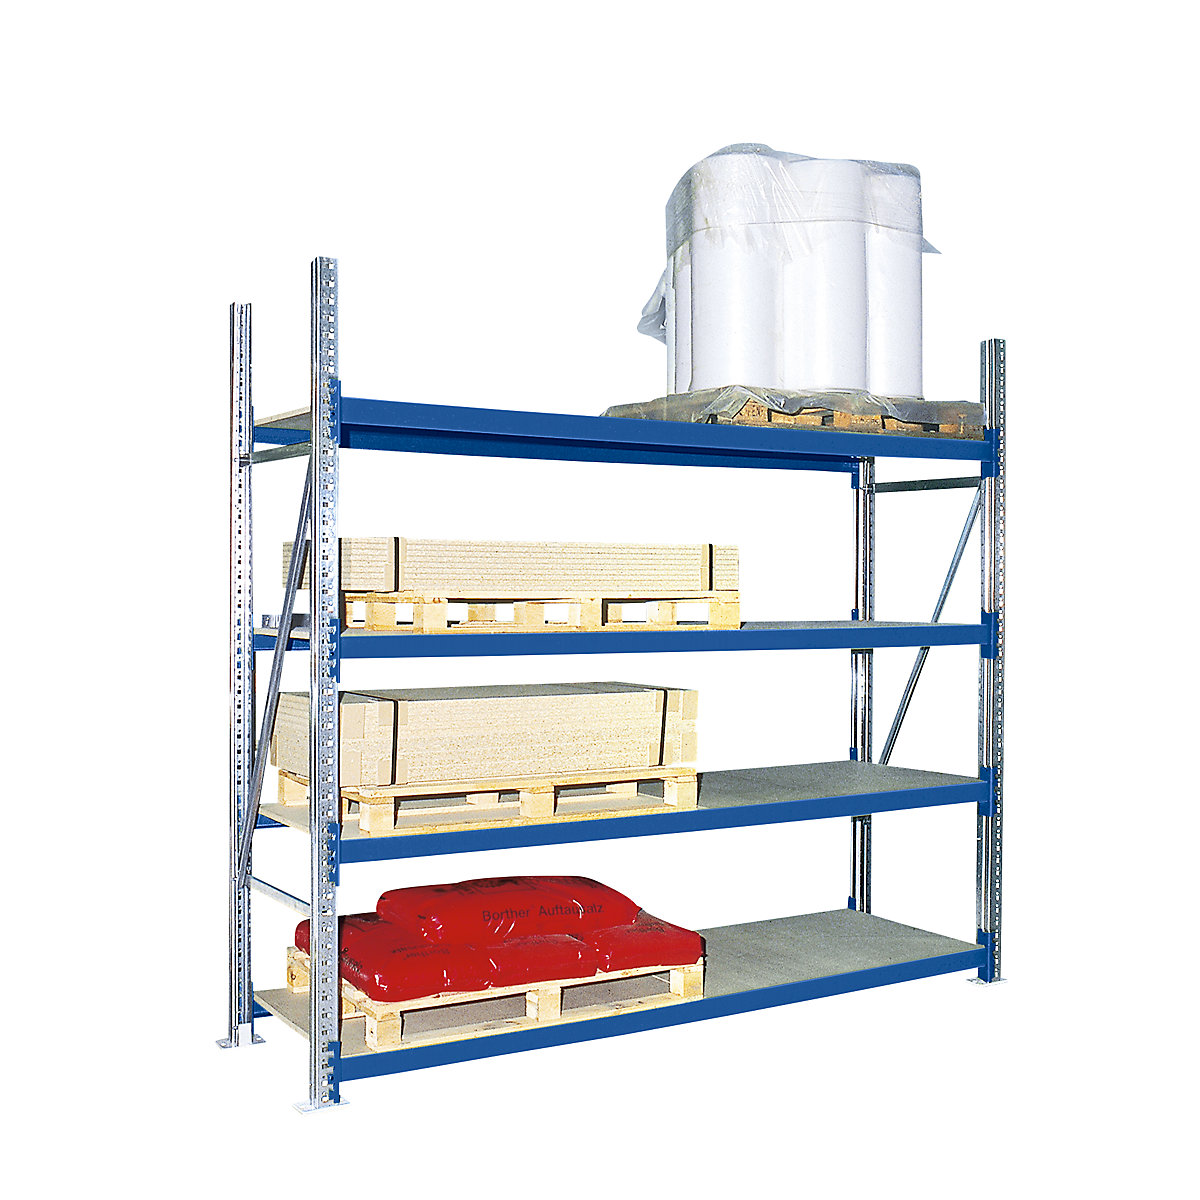 Wide span shelving unit with moulded chipboard shelves – eurokraft pro, depth 1100 mm, cross beam length 2700 mm, height 2500 mm, standard shelf unit, blue RAL 5010